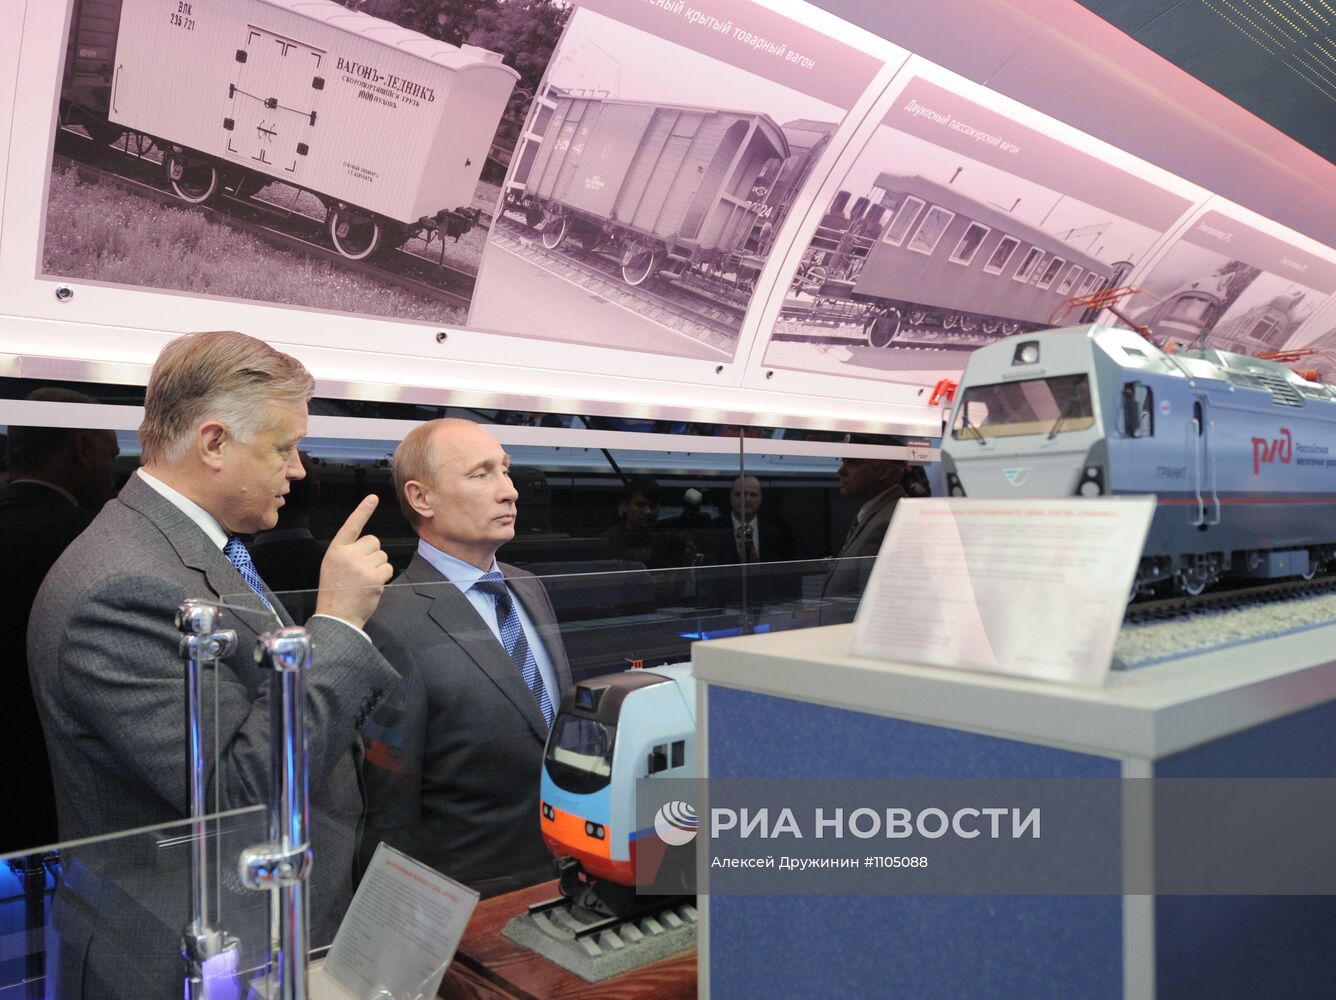 В.Путин посещает Центр научно-технического развития ОАО "РЖД"